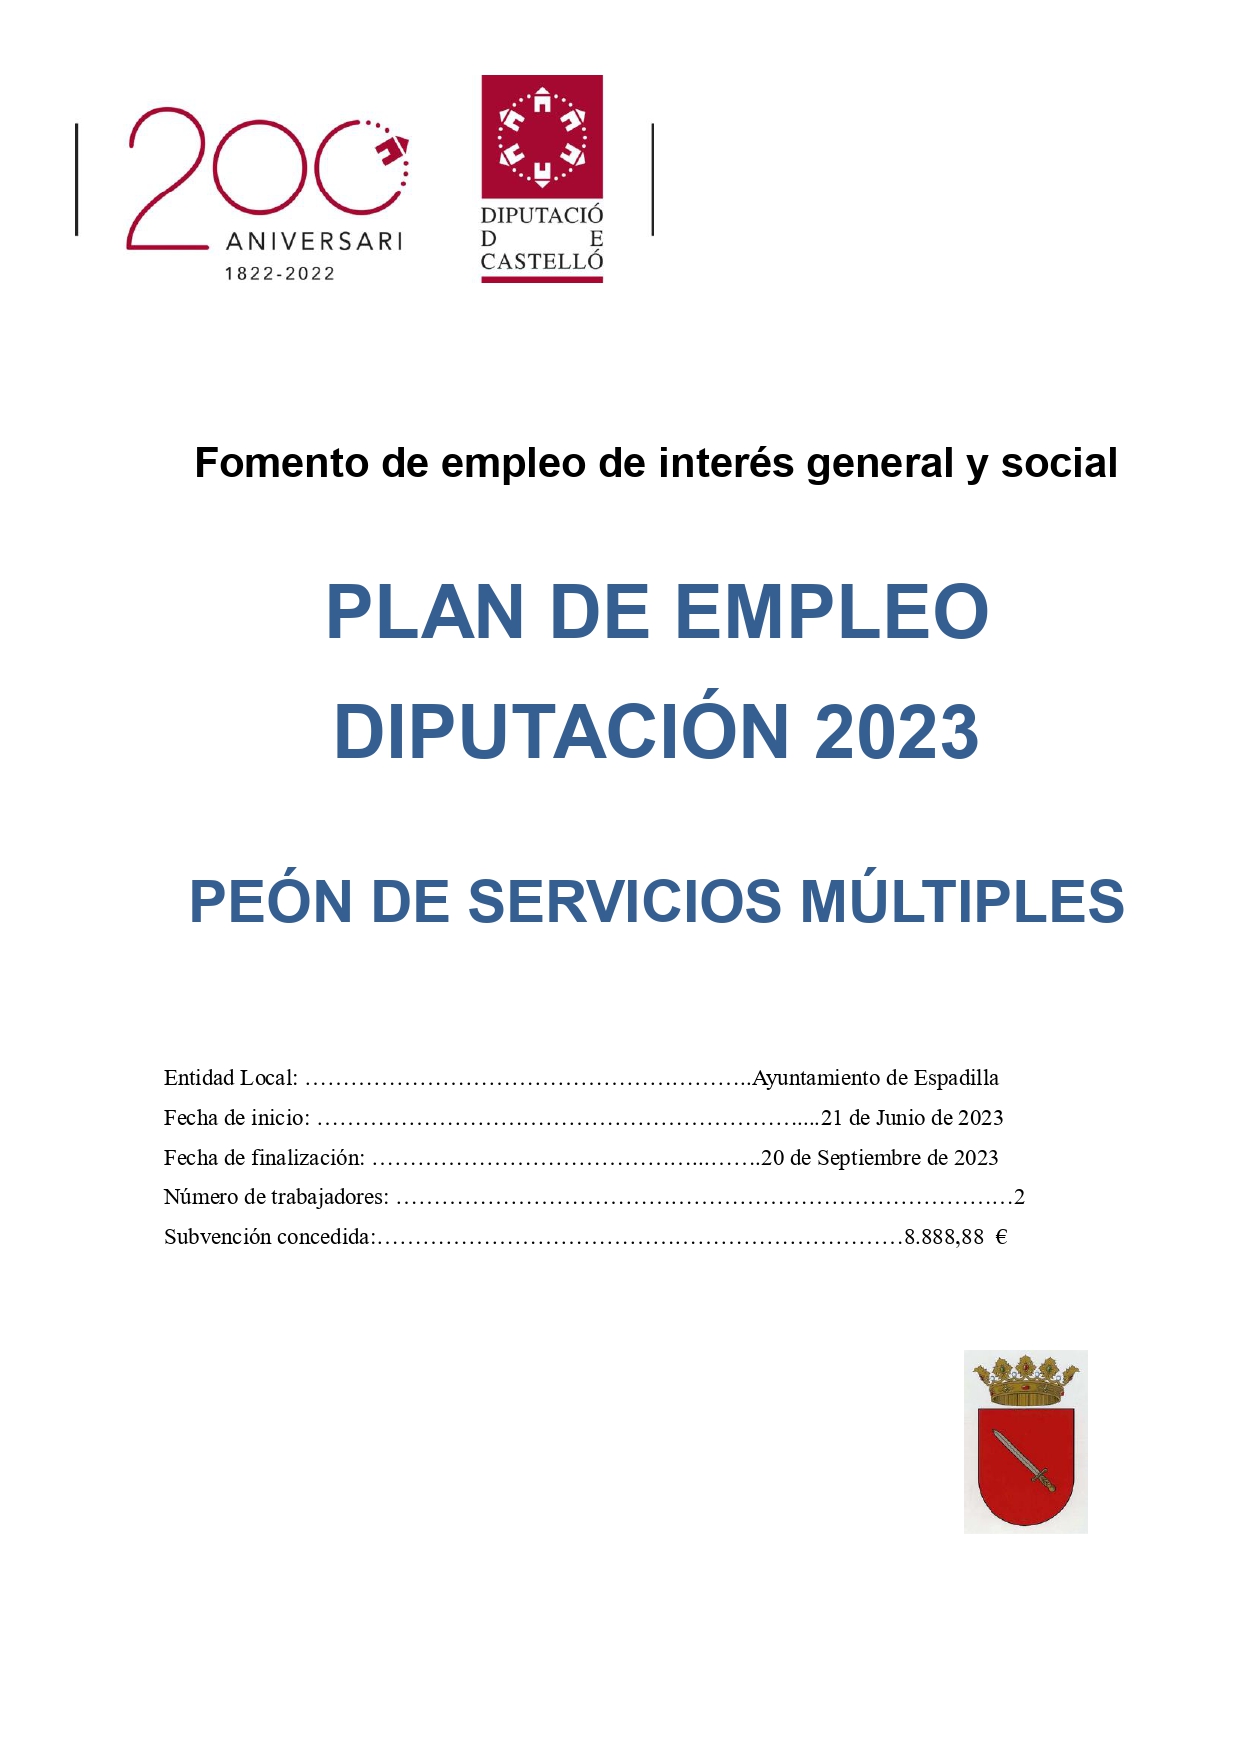 PLAN DE EMPLEO DIPUTACIÓN 2023